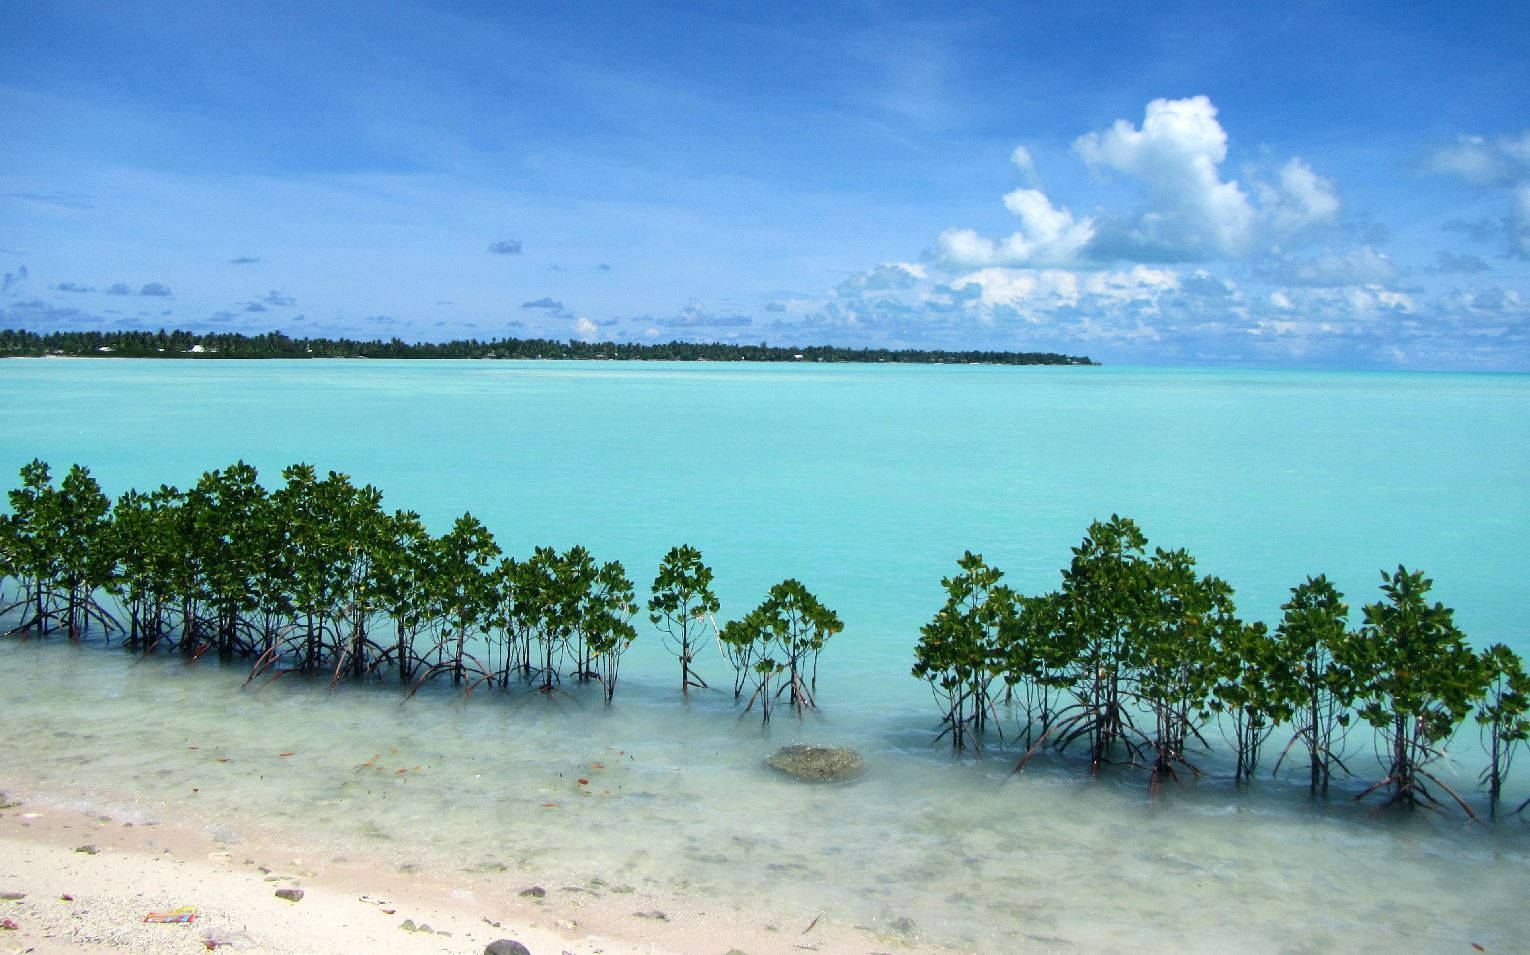 Kiribatimangrove Atoll Would Be Translated To 